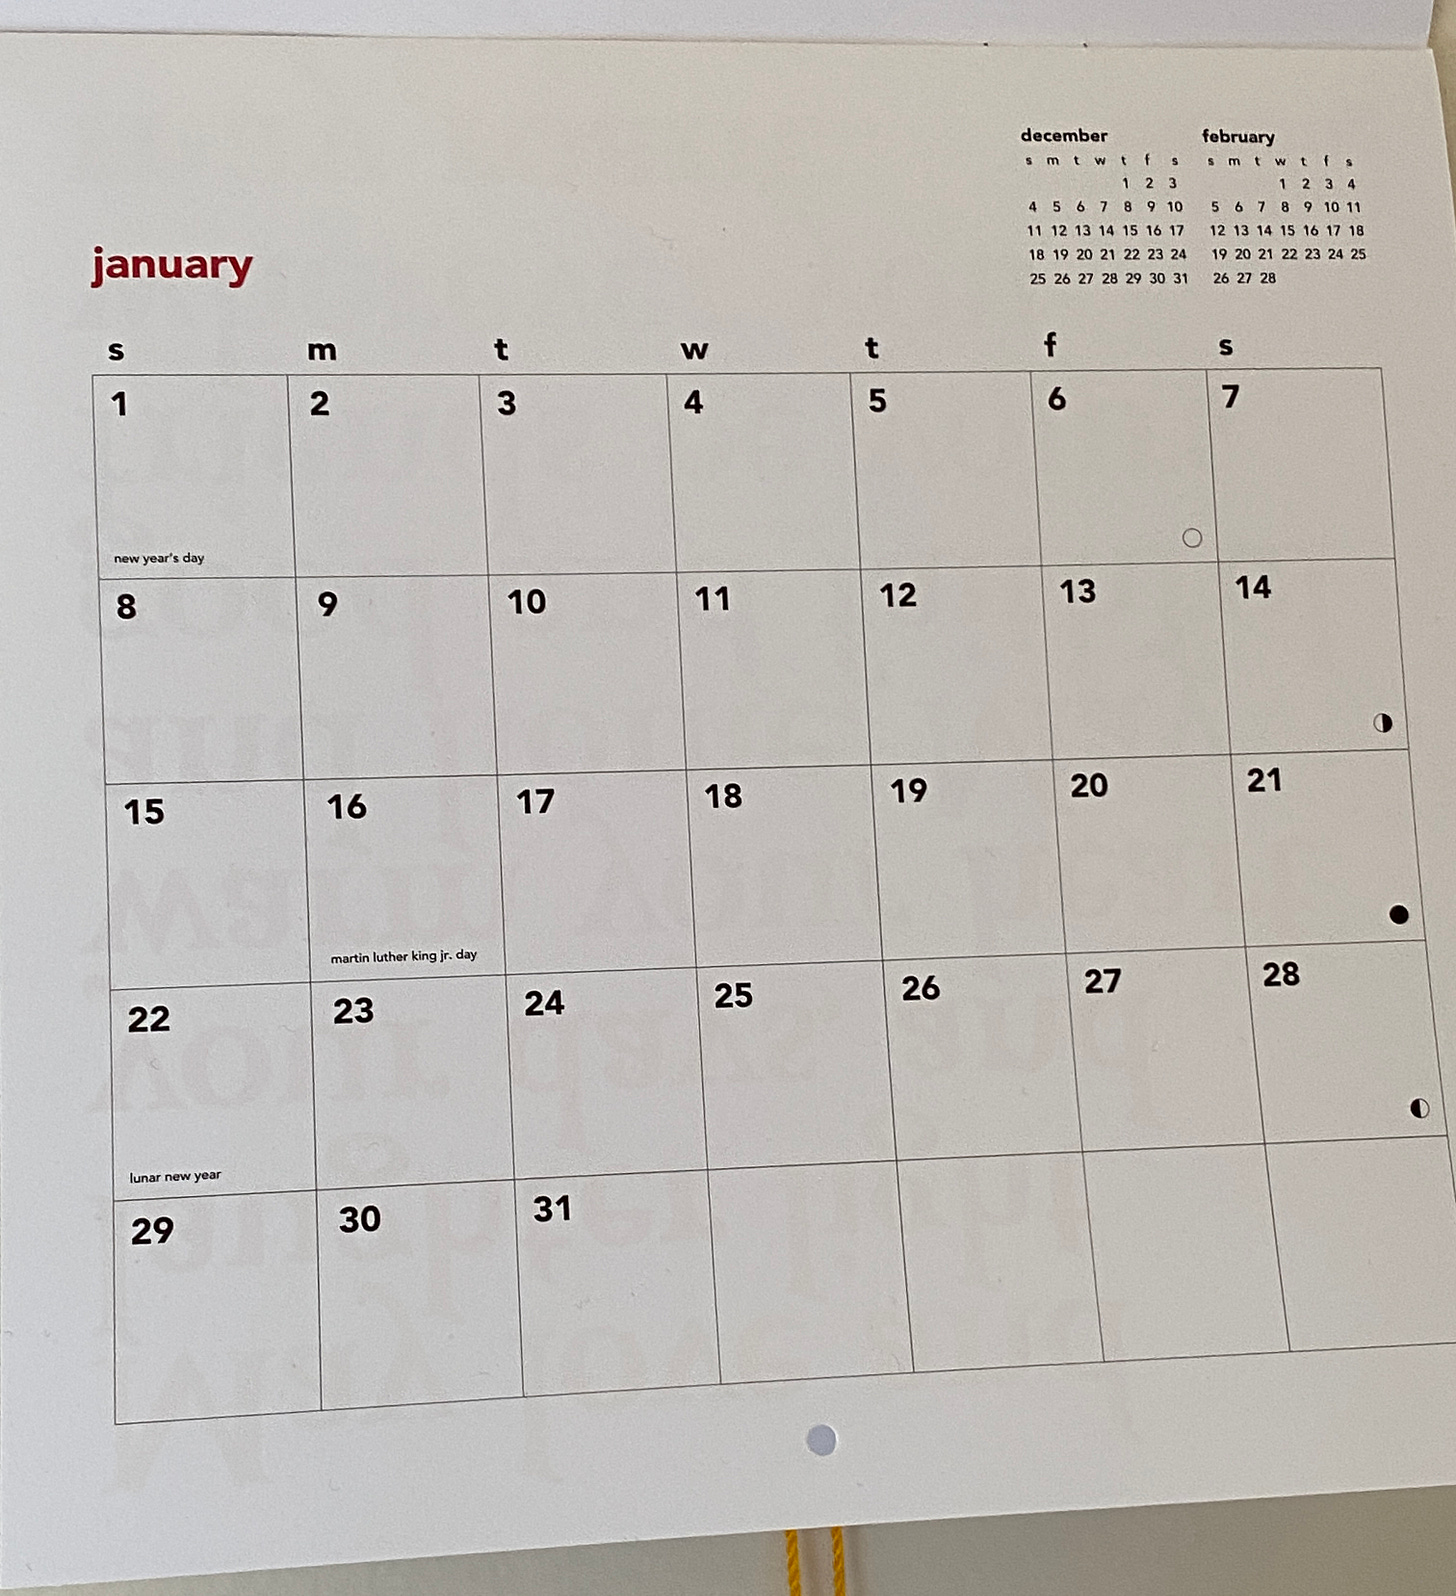 January 2023 calendar